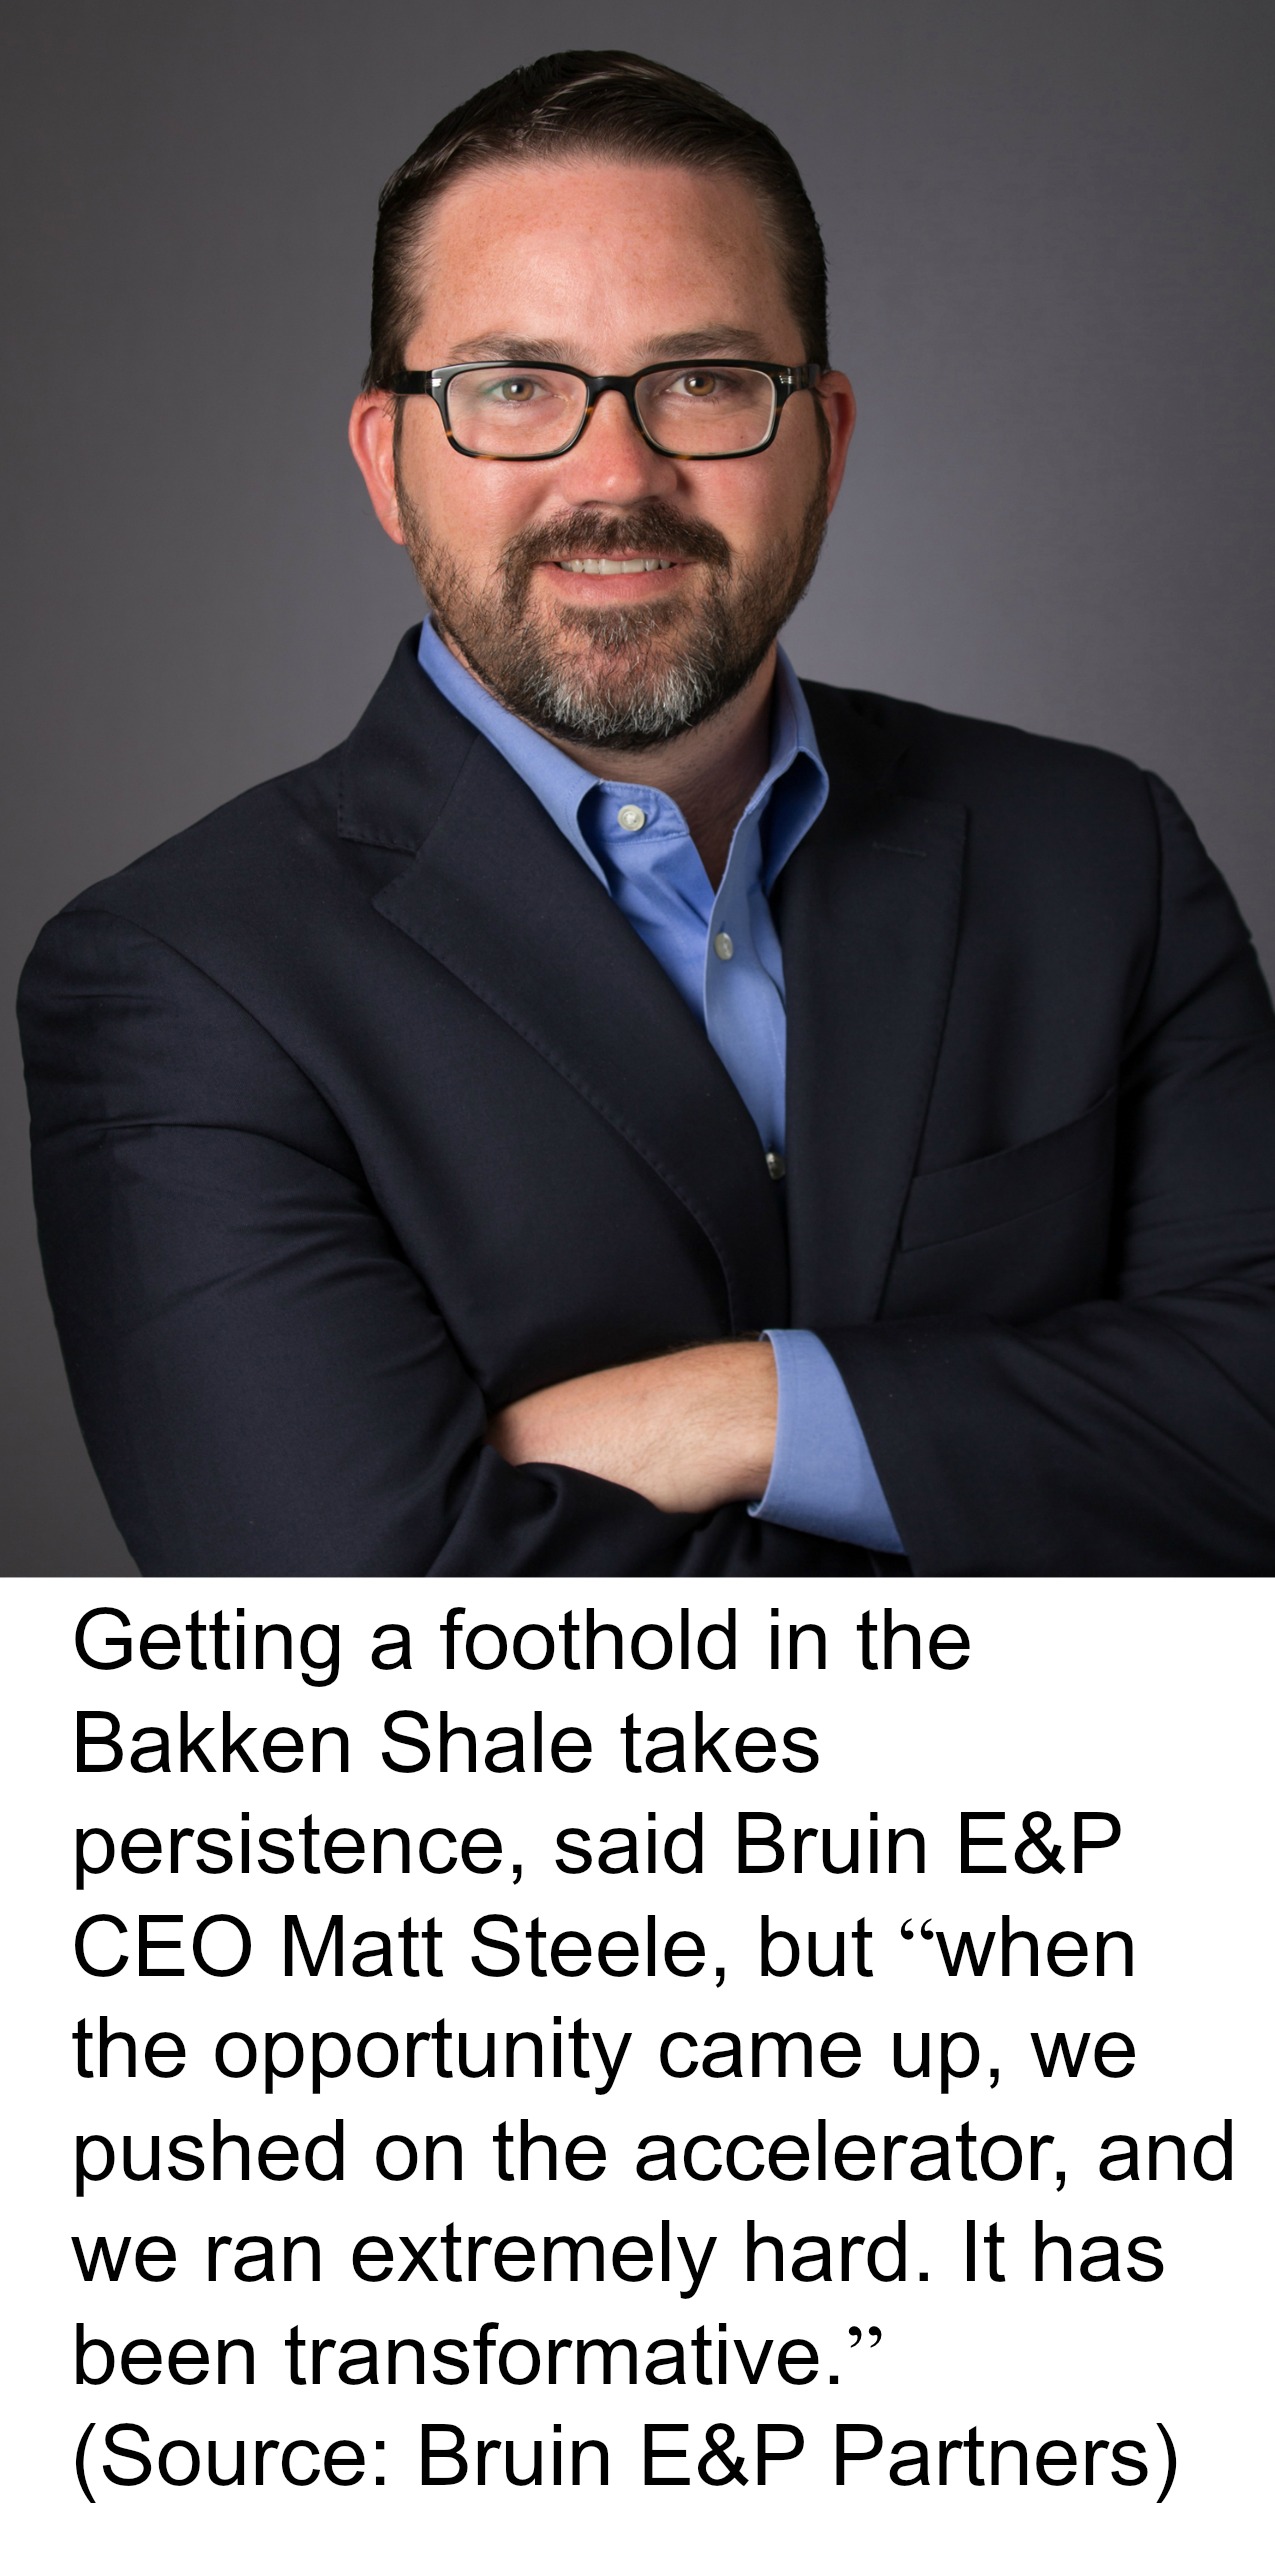 Getting a foothold in the Bakken Shale takes persistence, said Bruin E&P CEO Matt Steele. (Source: Bruin E&P Partners)